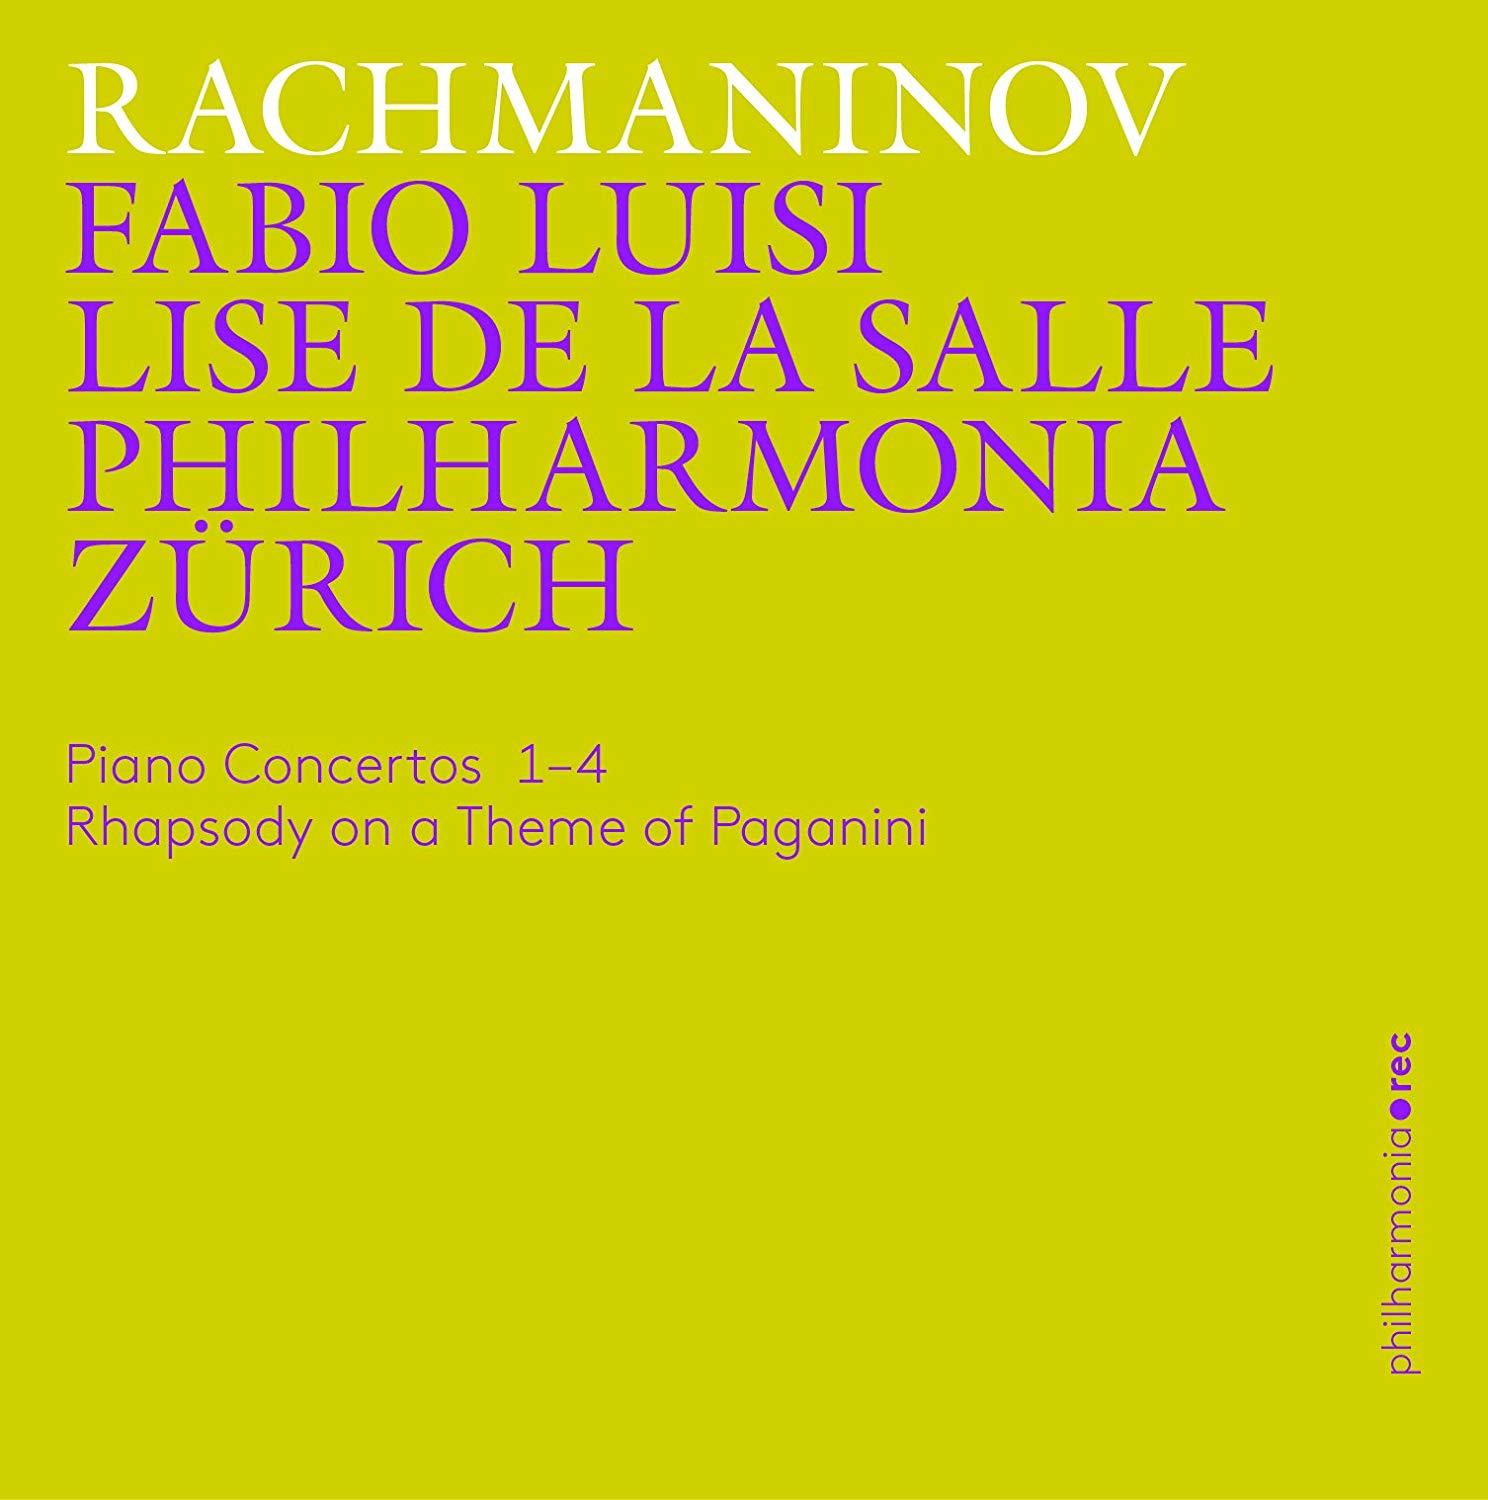 Rachmaninov : Piano Concertos 1-4 | Rhapsody on a Theme of Paganini / Fabio Luisi | Lise De La Salle | Philharmonia Zurich